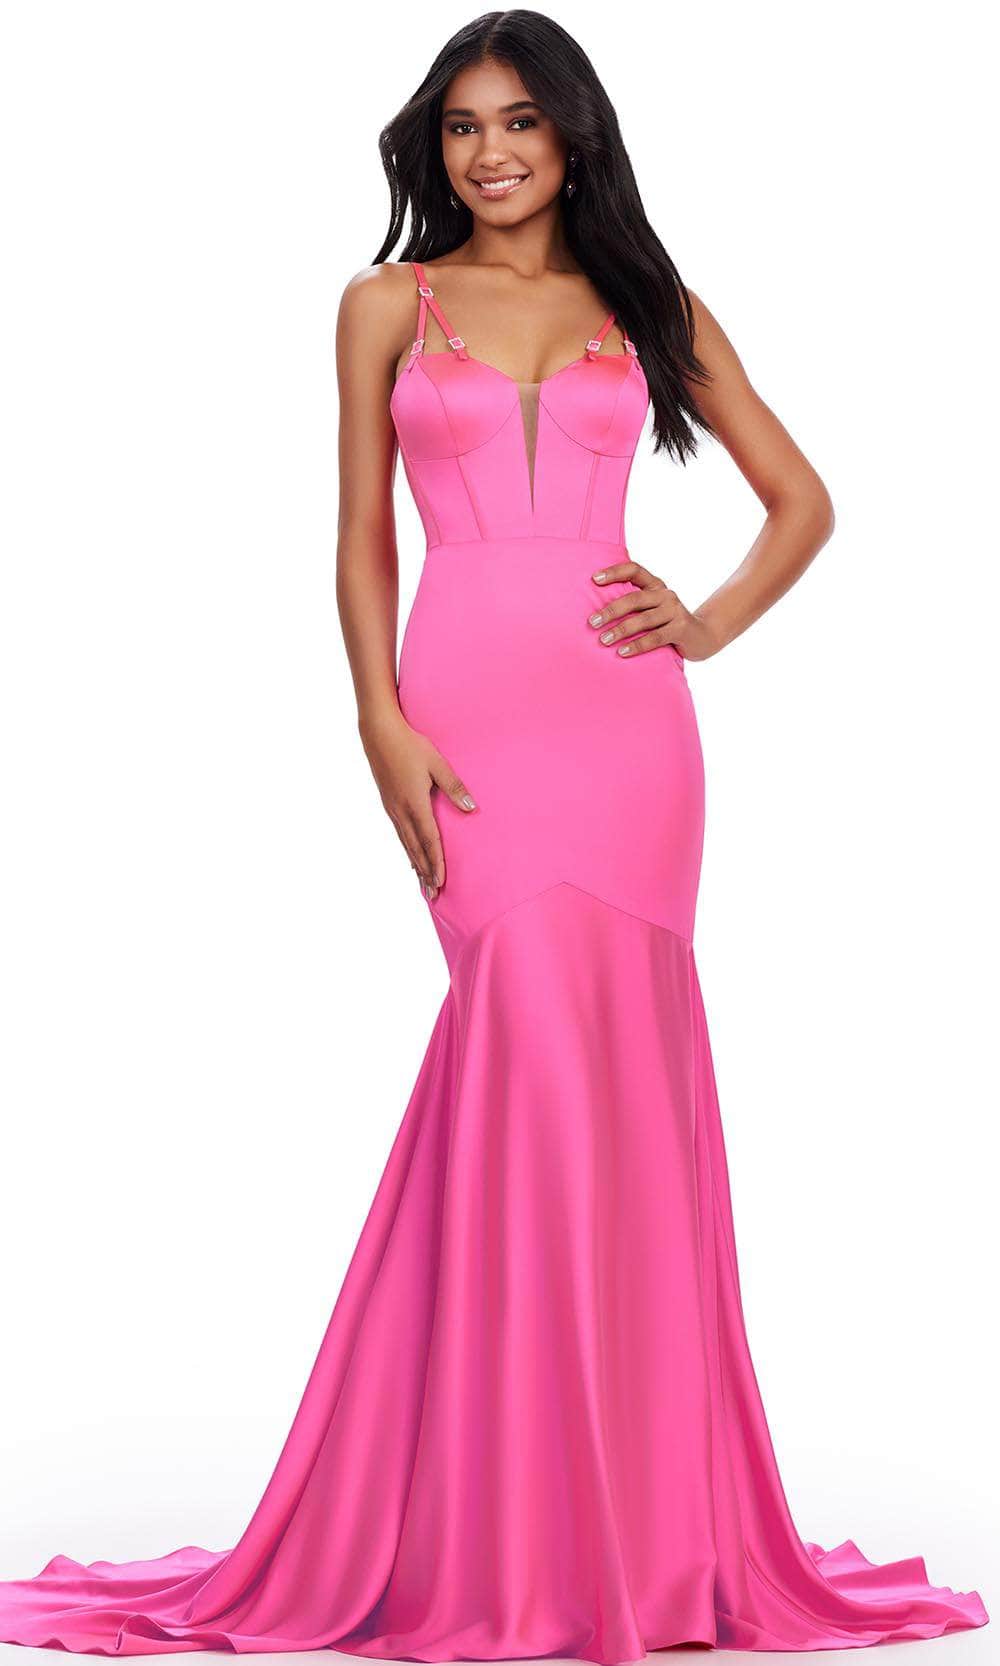 Ashley Lauren 11644 - Plunging Bustier Prom Dress 00 /  Hot Pink